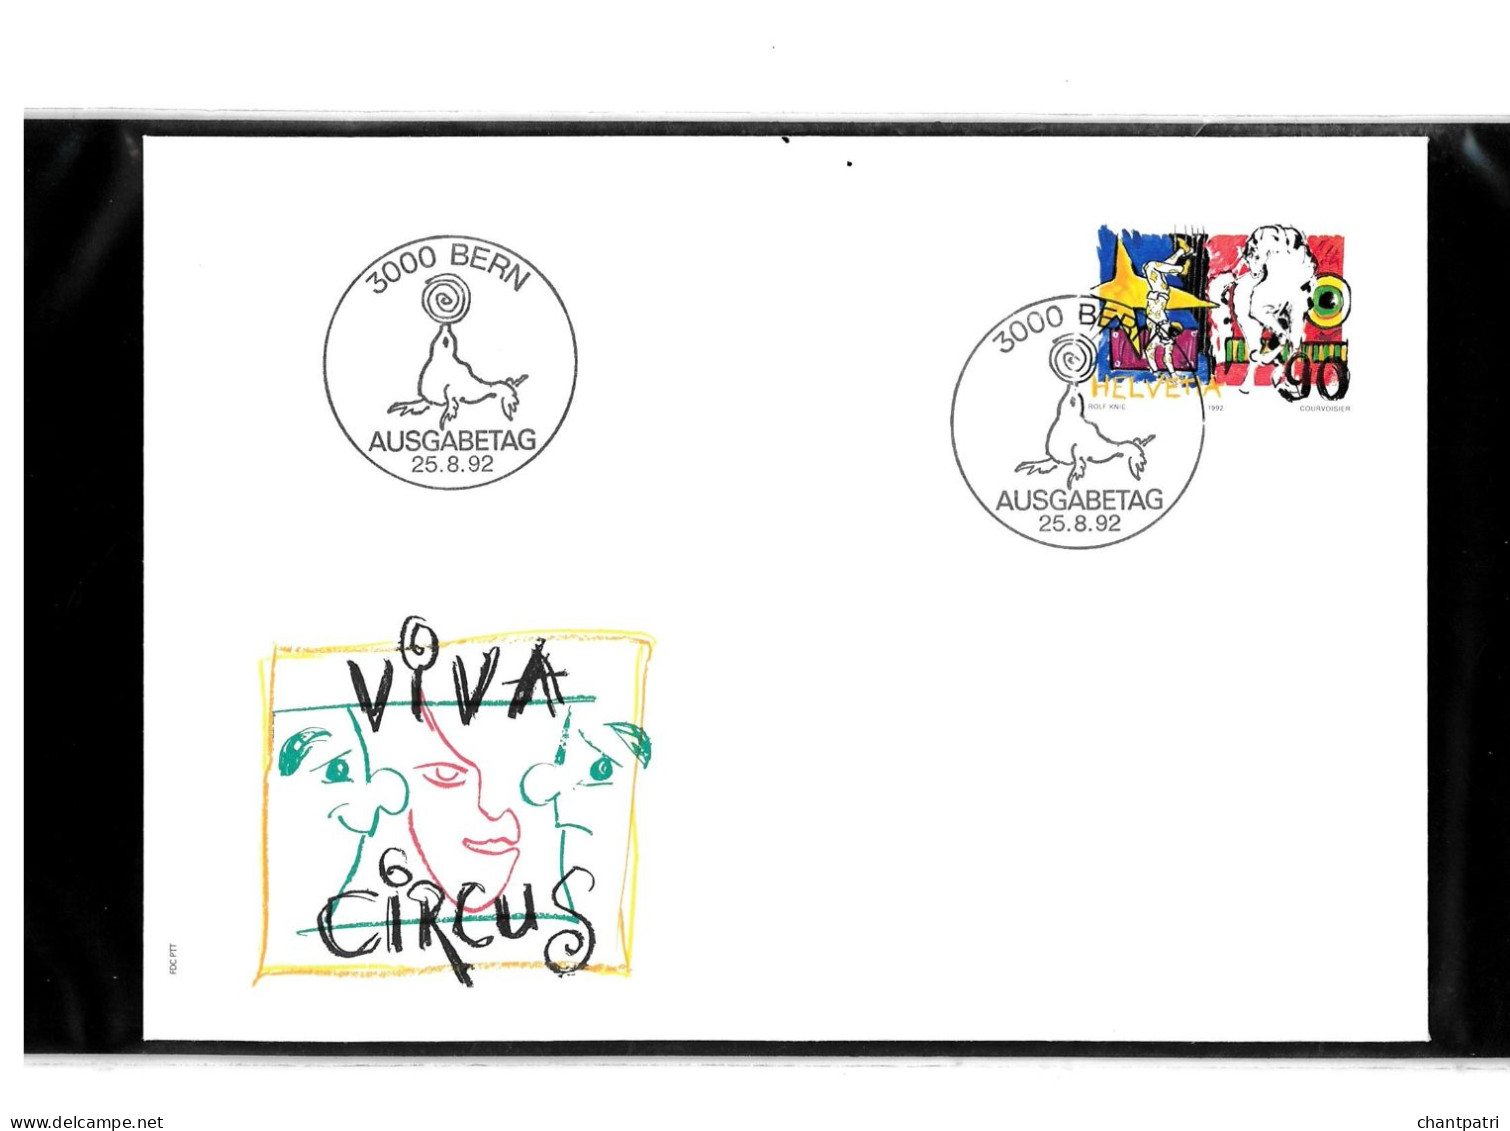 3000 Bern - Viva Circus - Ausgabetag - 25 08 1992 - Beli FDC 015 - Briefe U. Dokumente